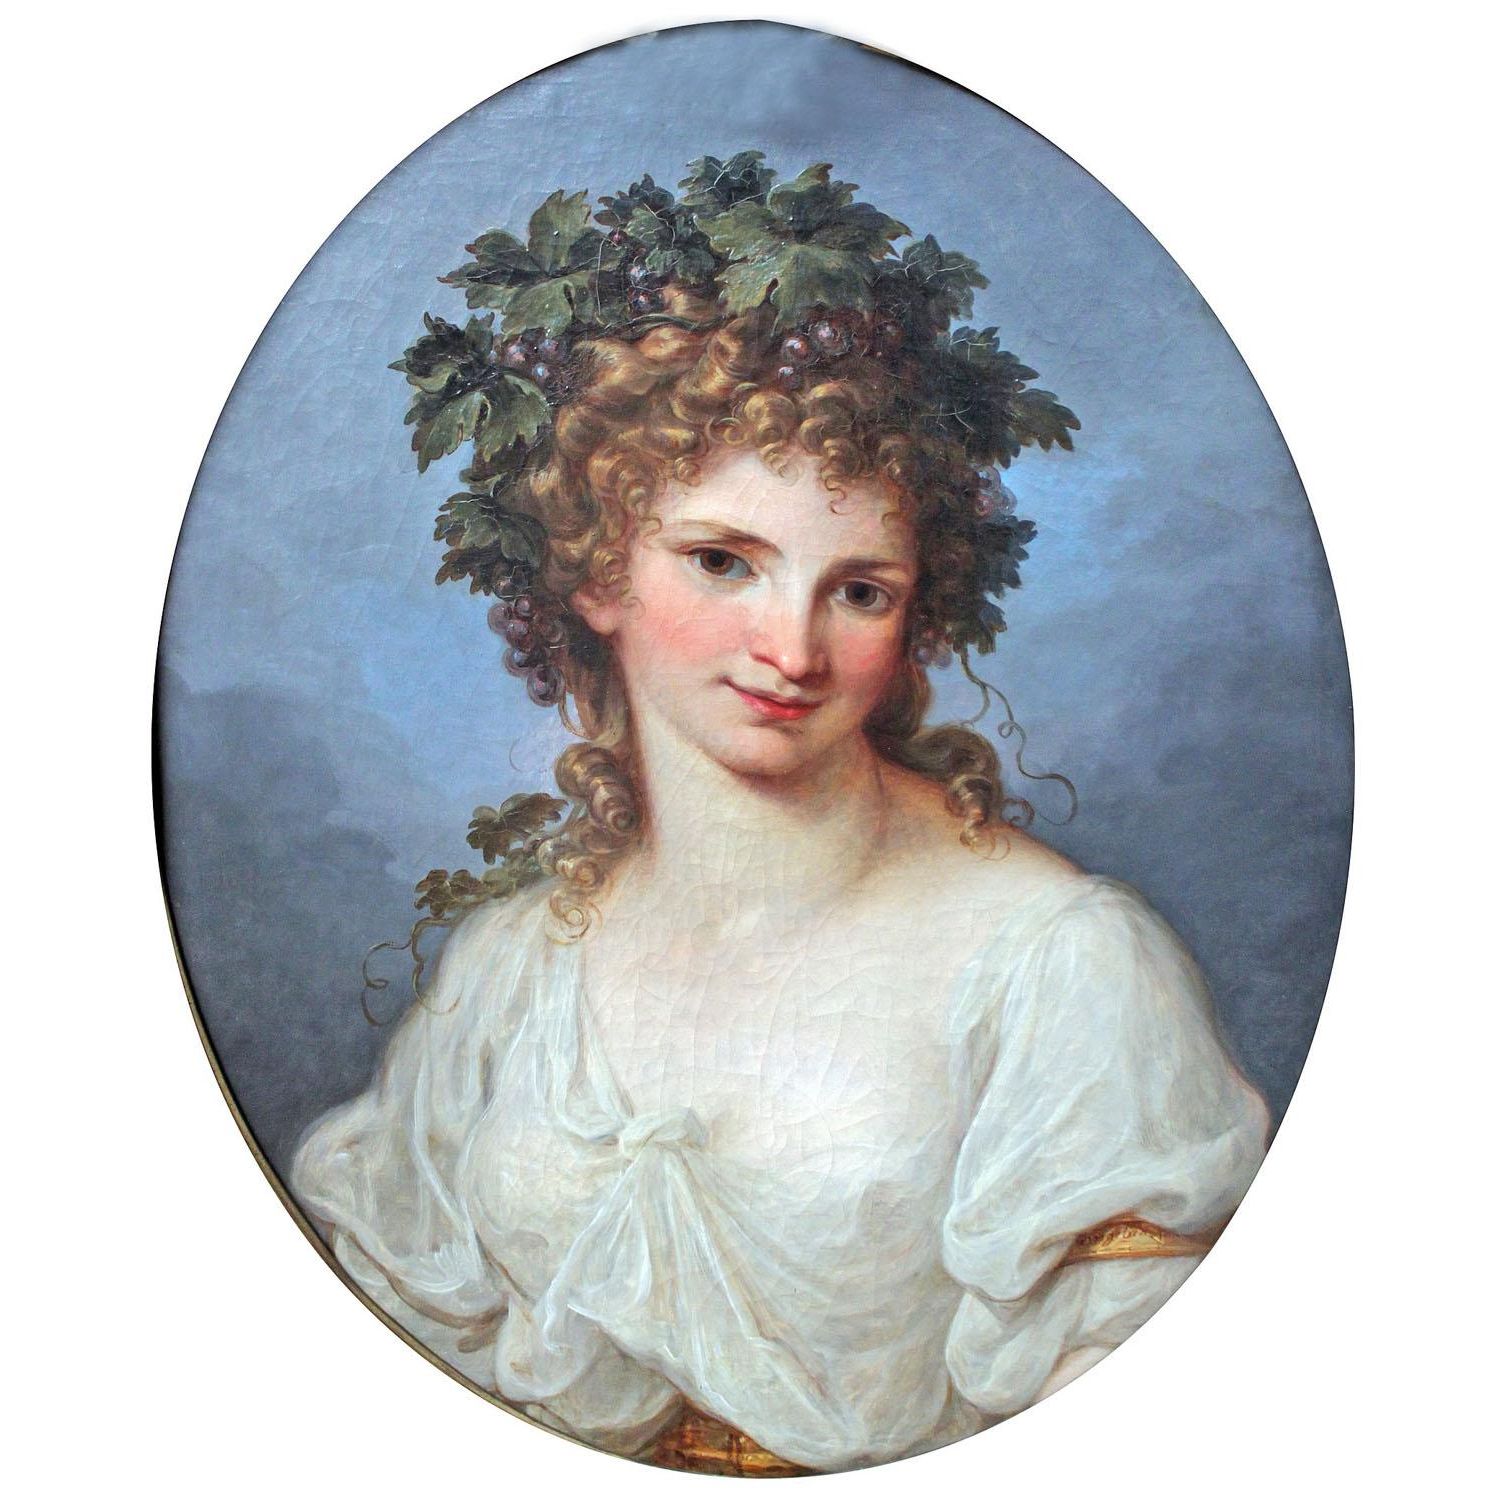 Angelica Kauffmann. Self-Portrait as Bacchante. 1786. Gemaldegalerie Berlin